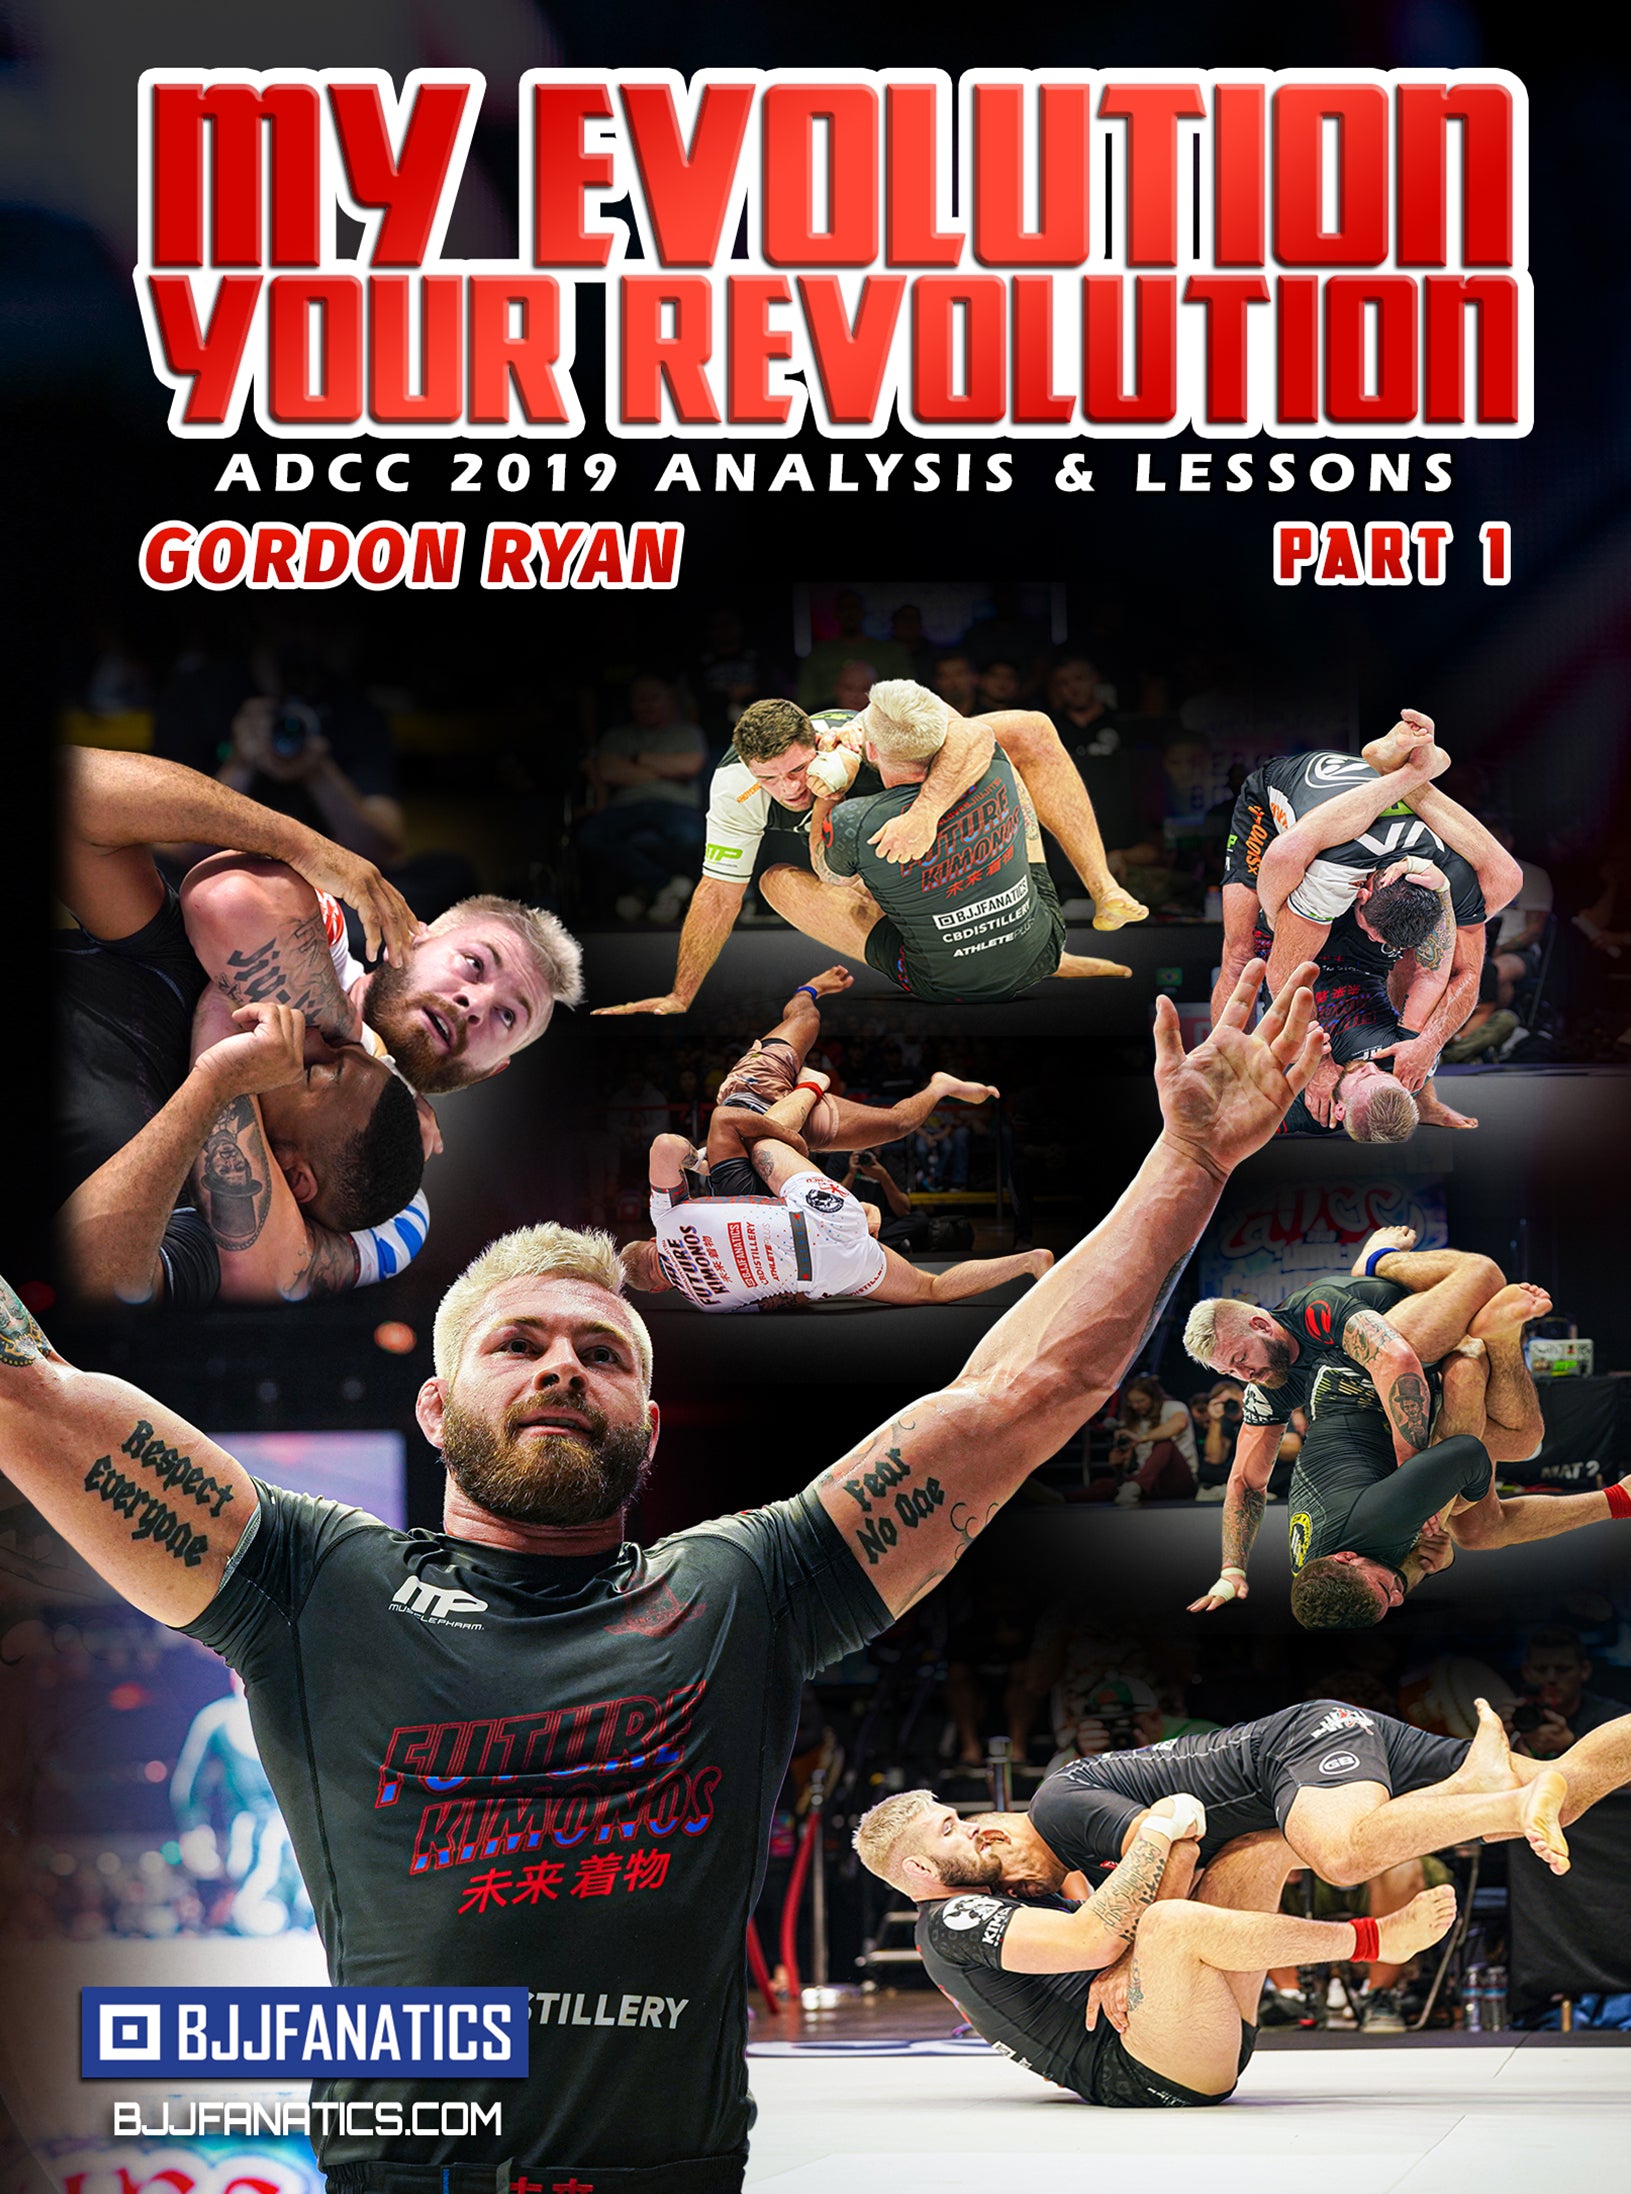 DVD/ブルーレイMy Evolution Your Revolution gordon  R